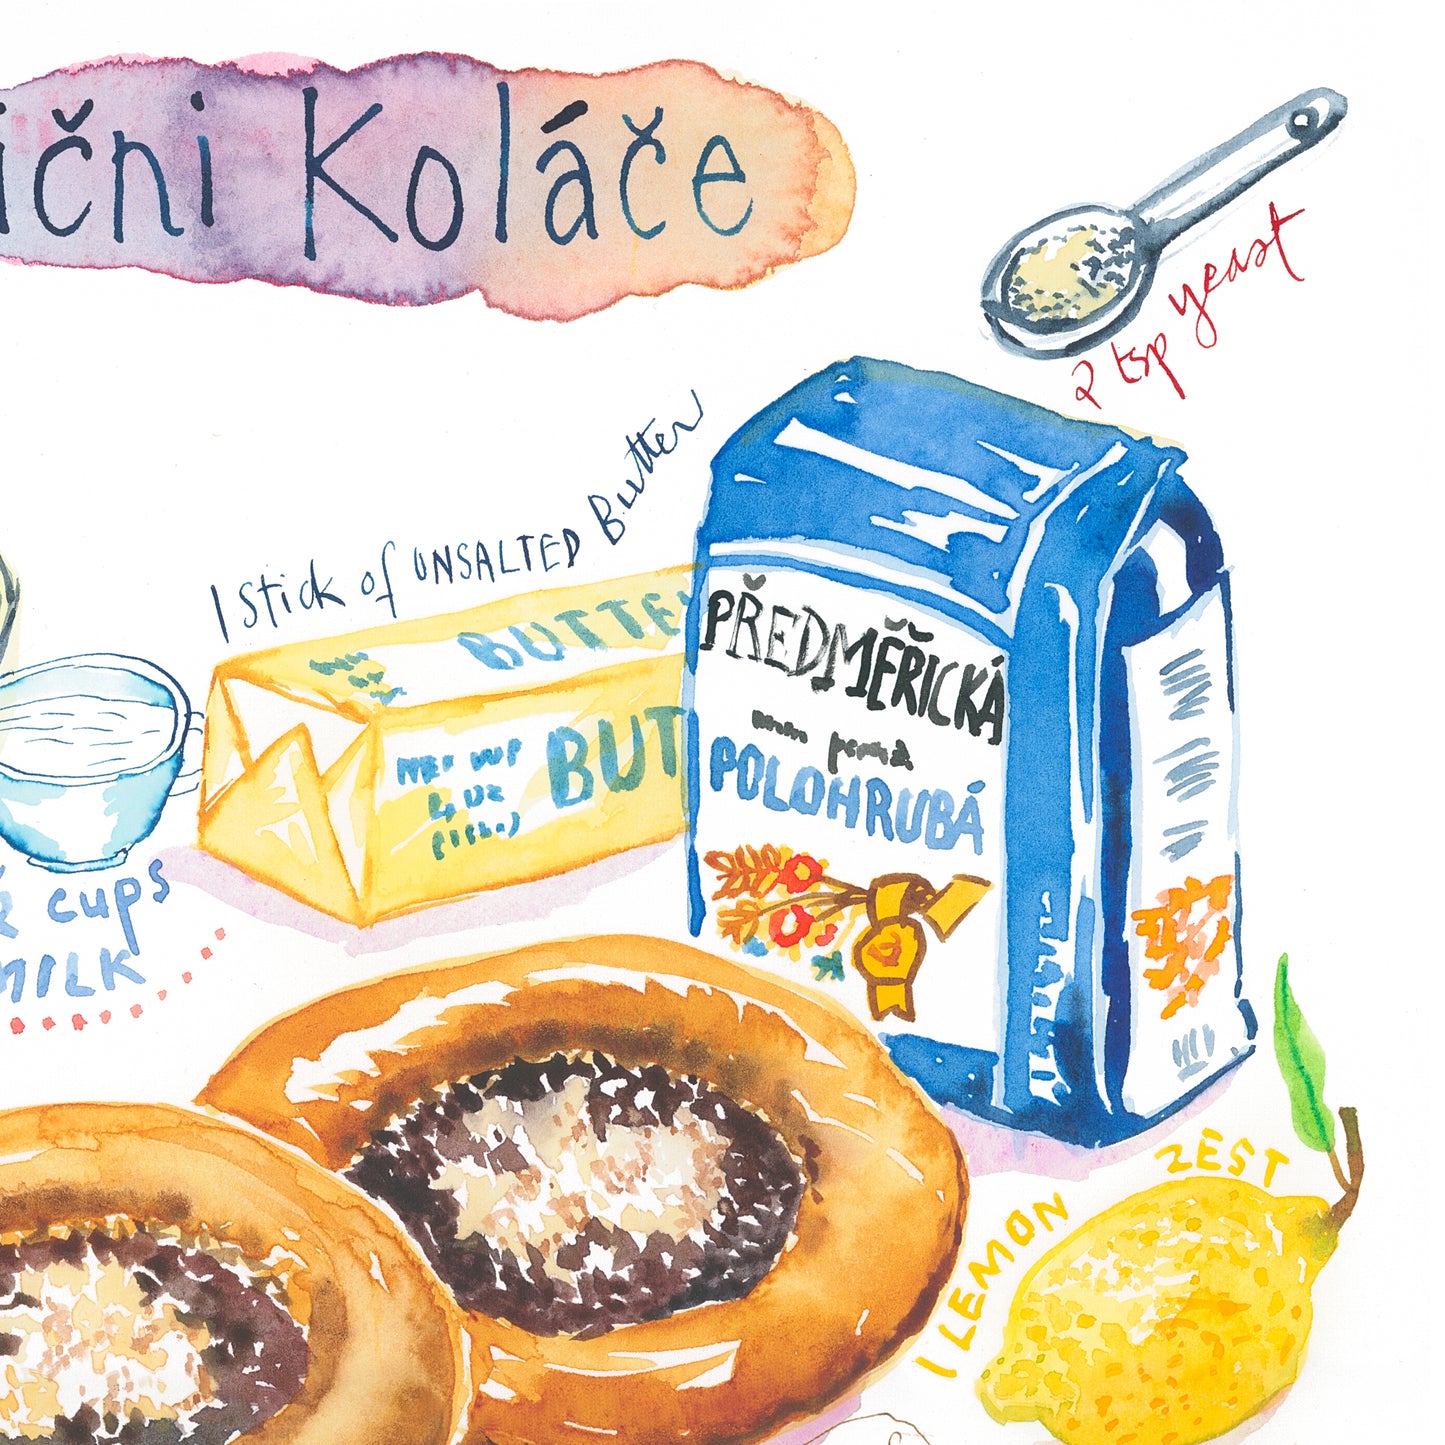 Kolache recipe. Original watercolor painting